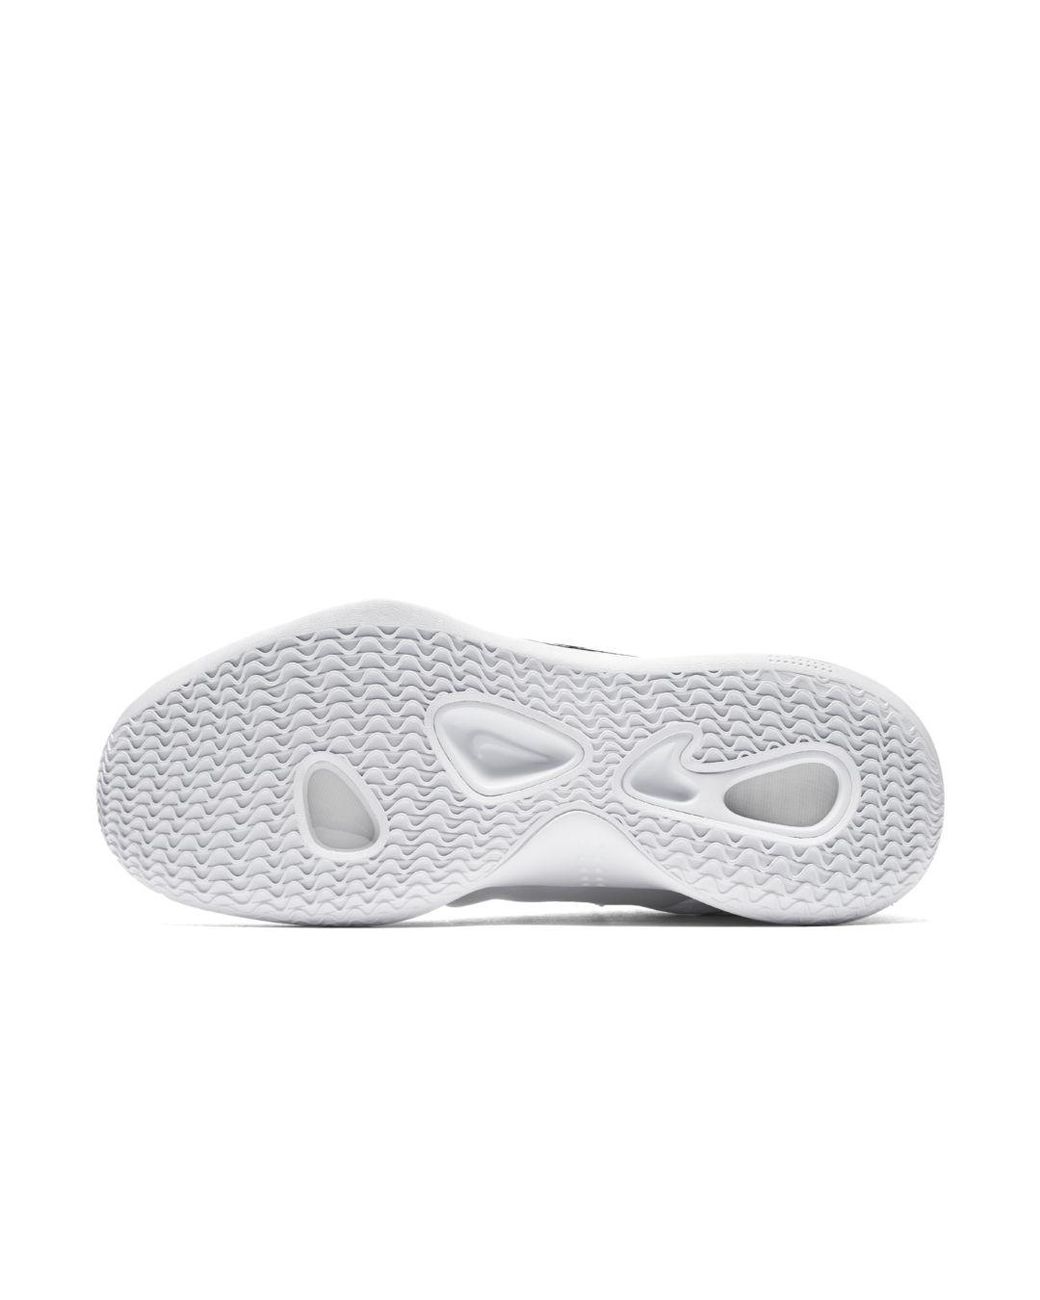 Nike Hyperdunk X Low Basketball Shoes in White/Black (White) for Men | Lyst